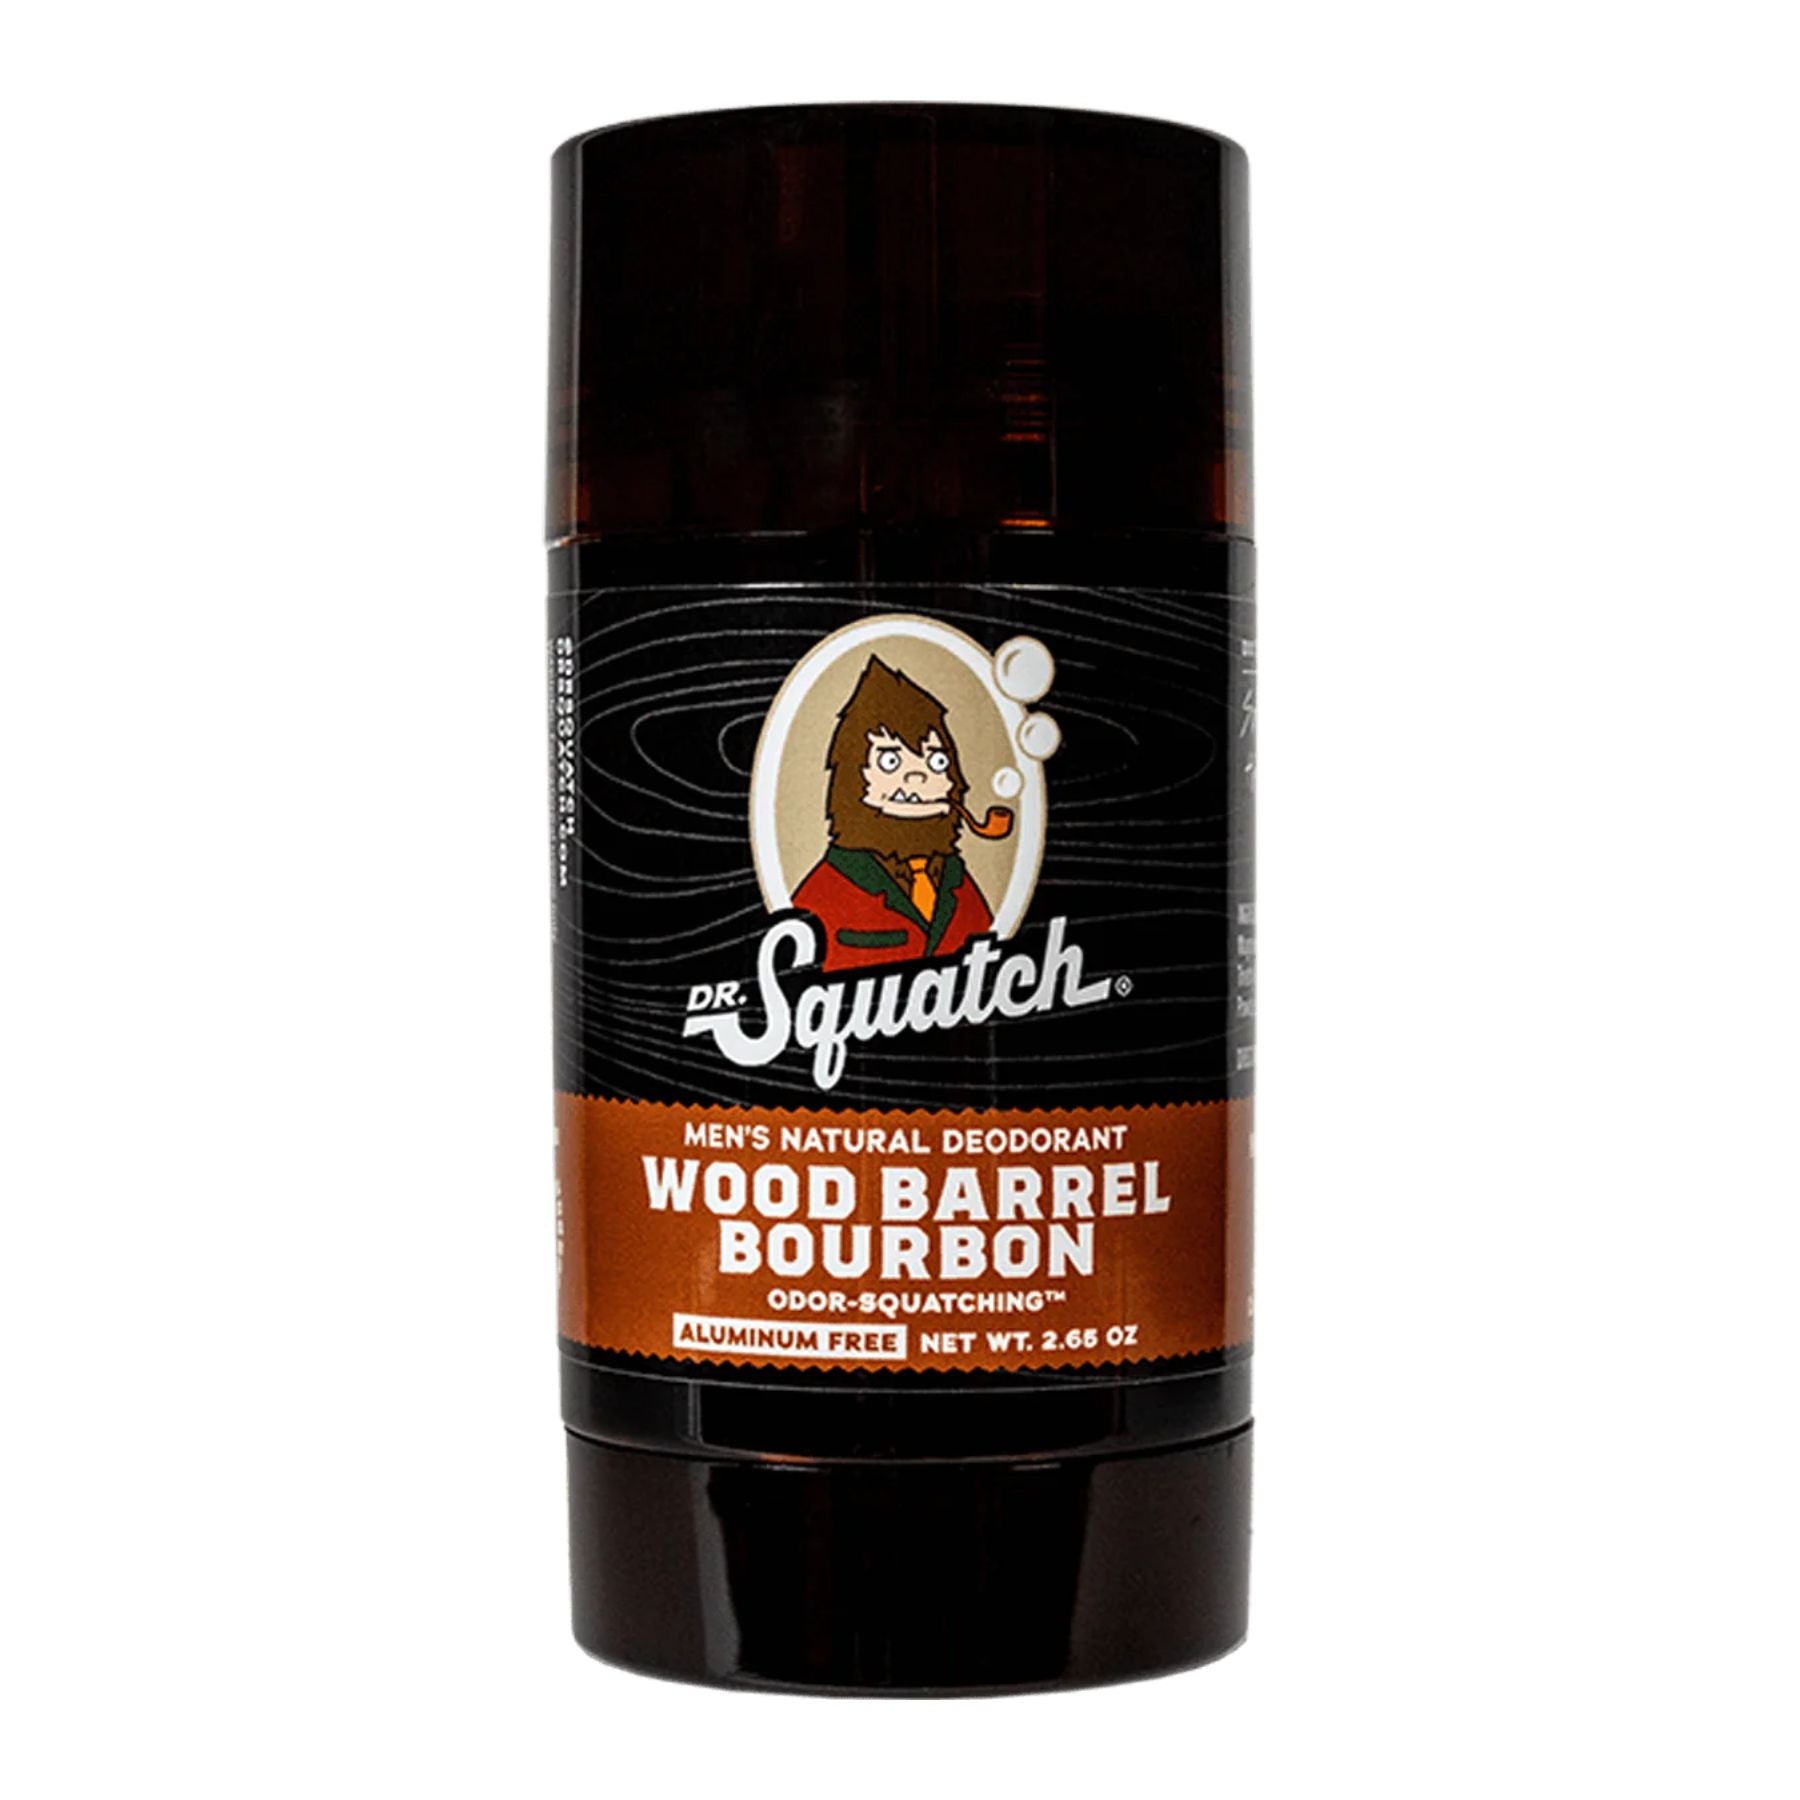 Dr. Squatch Men's Deodorant Wood Barrel Bourbon 75g